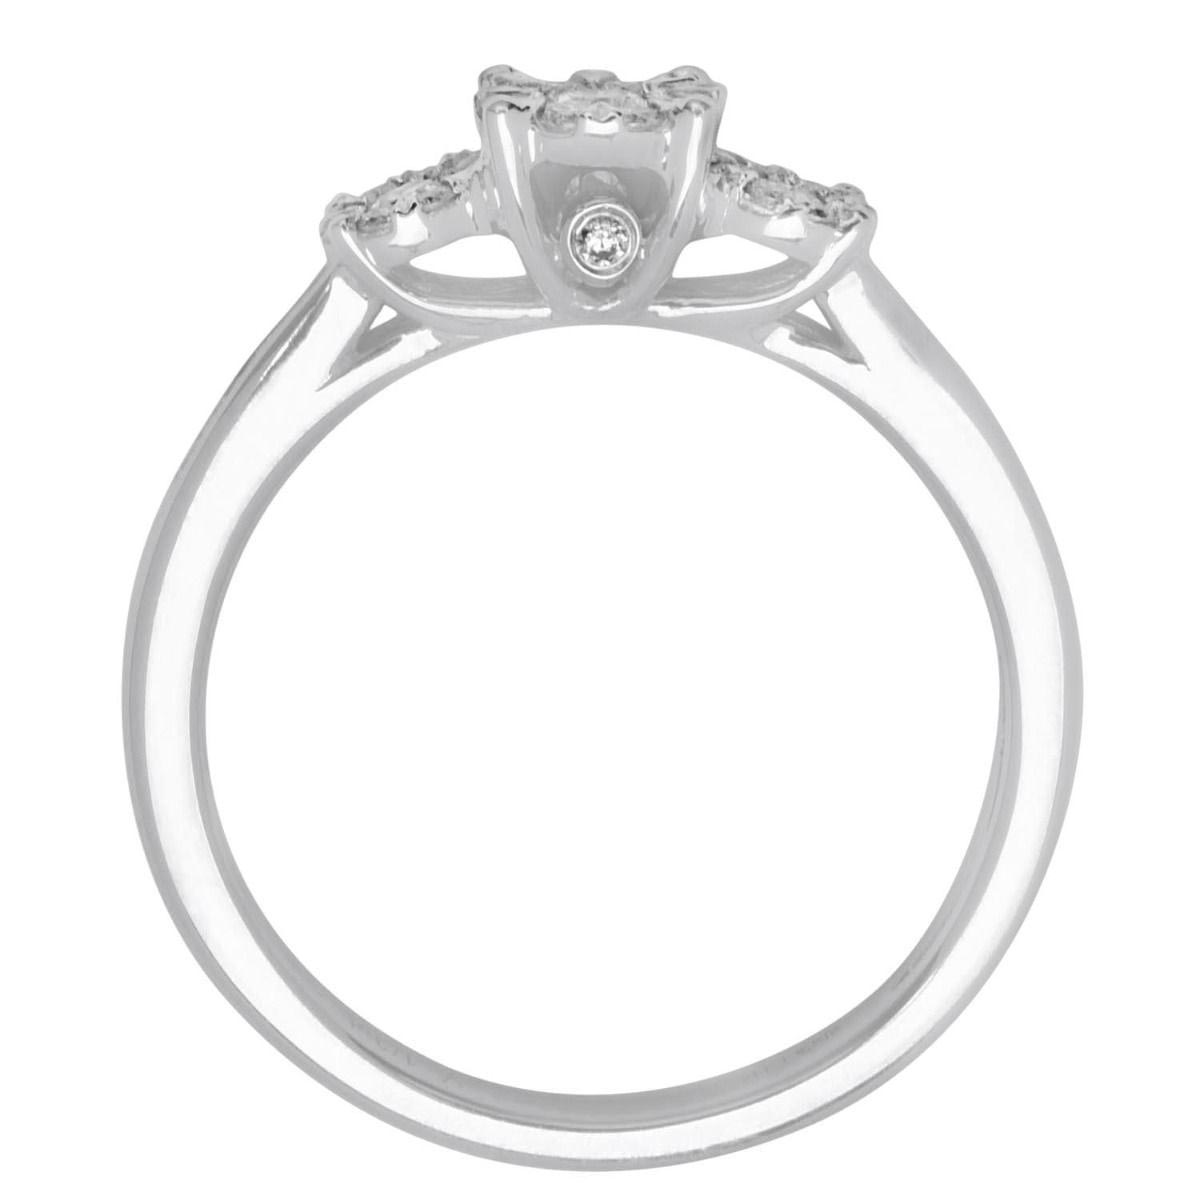 Lovebright Diamond Engagement Ring in 14kt White Gold (1/3ct tw)